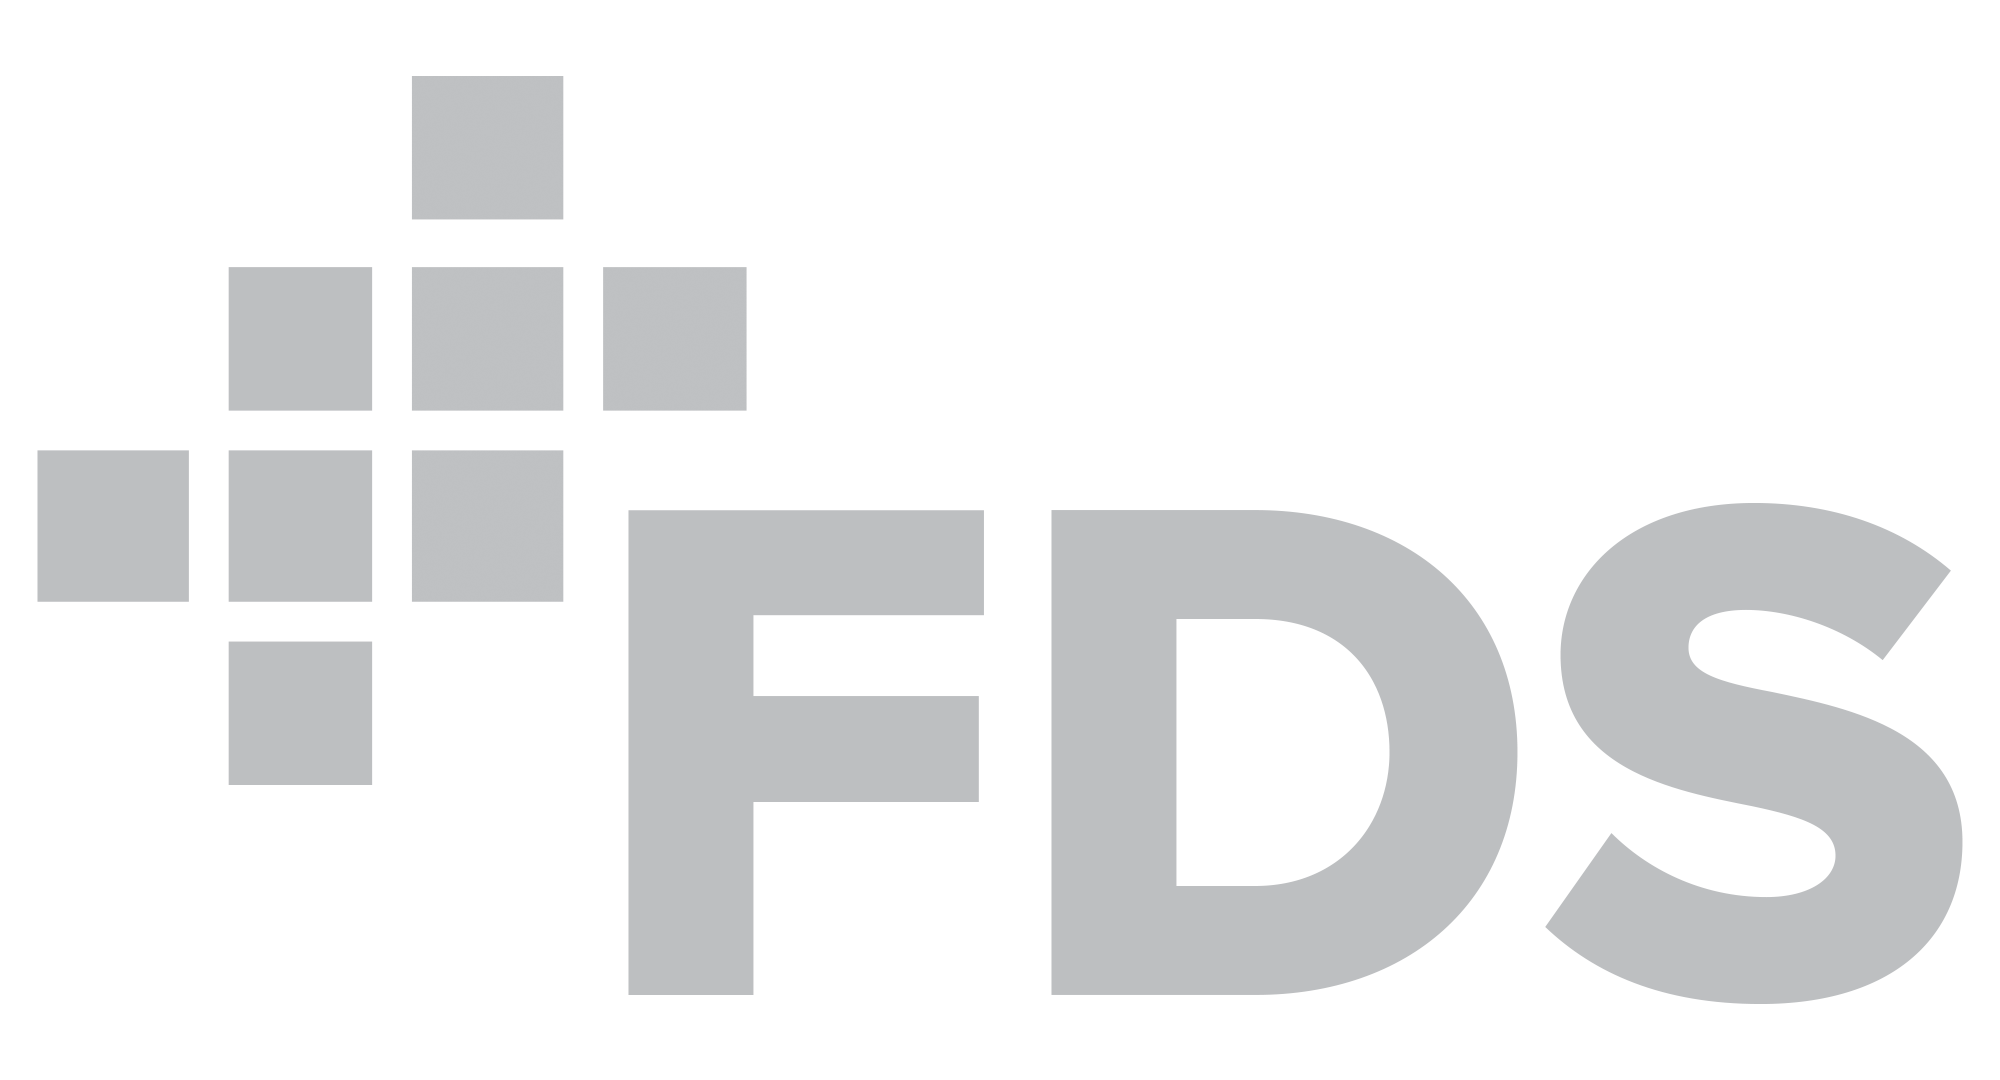 FDS Logo